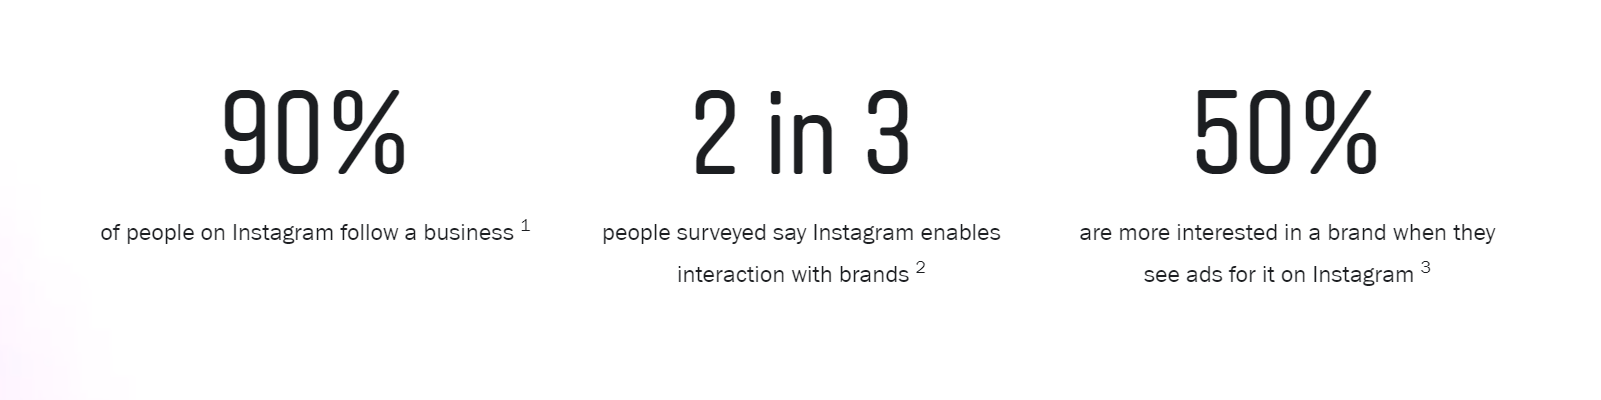 Instagram社交媒体营销数据